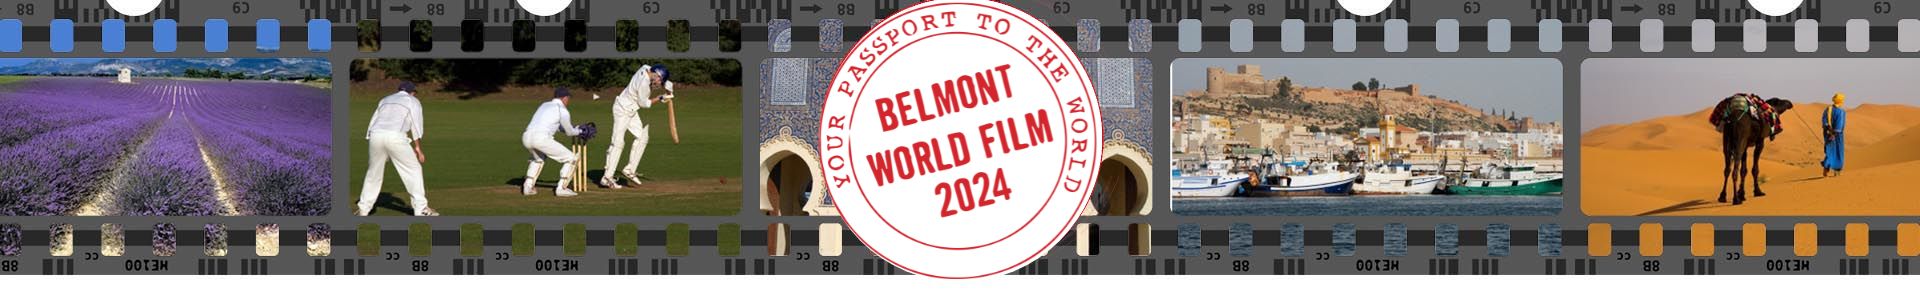 Belmont World Film's 22nd International Film Series: Films Available Online